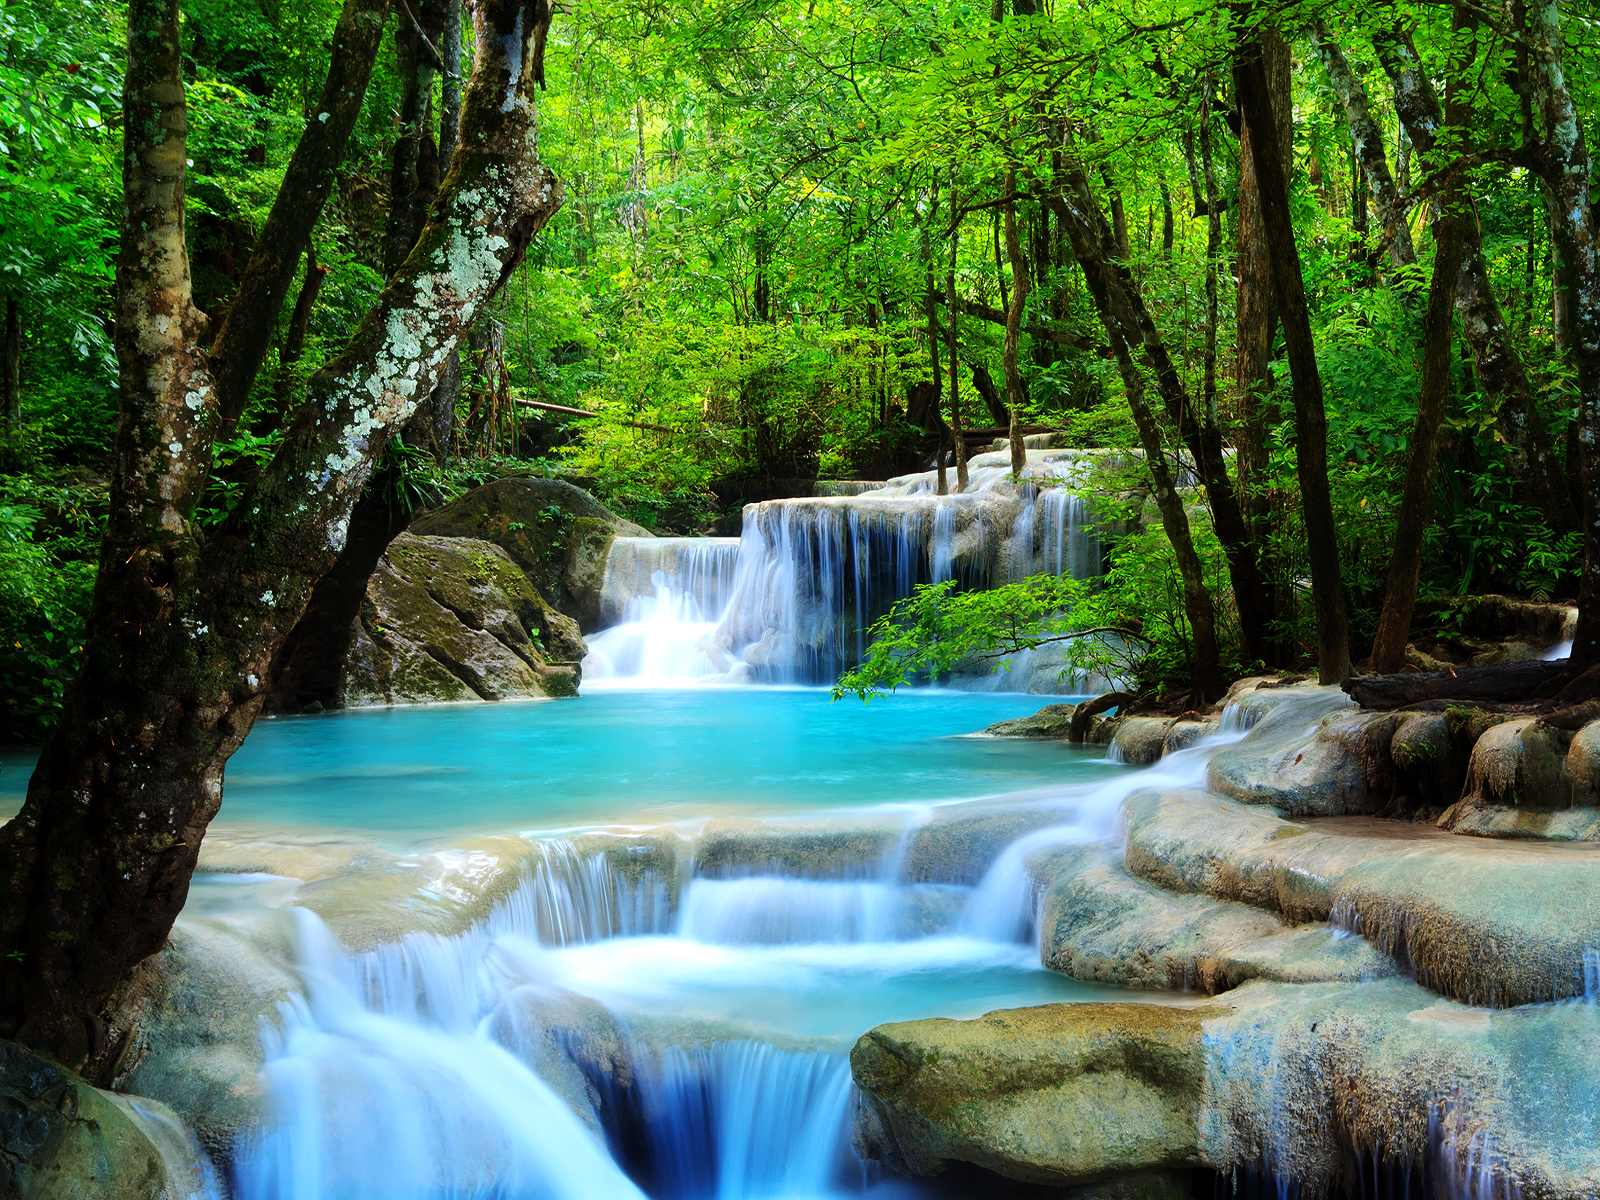 URL: http://thelonggoodbye.wordpress.com/2012/10/01/forest-waterfall ...